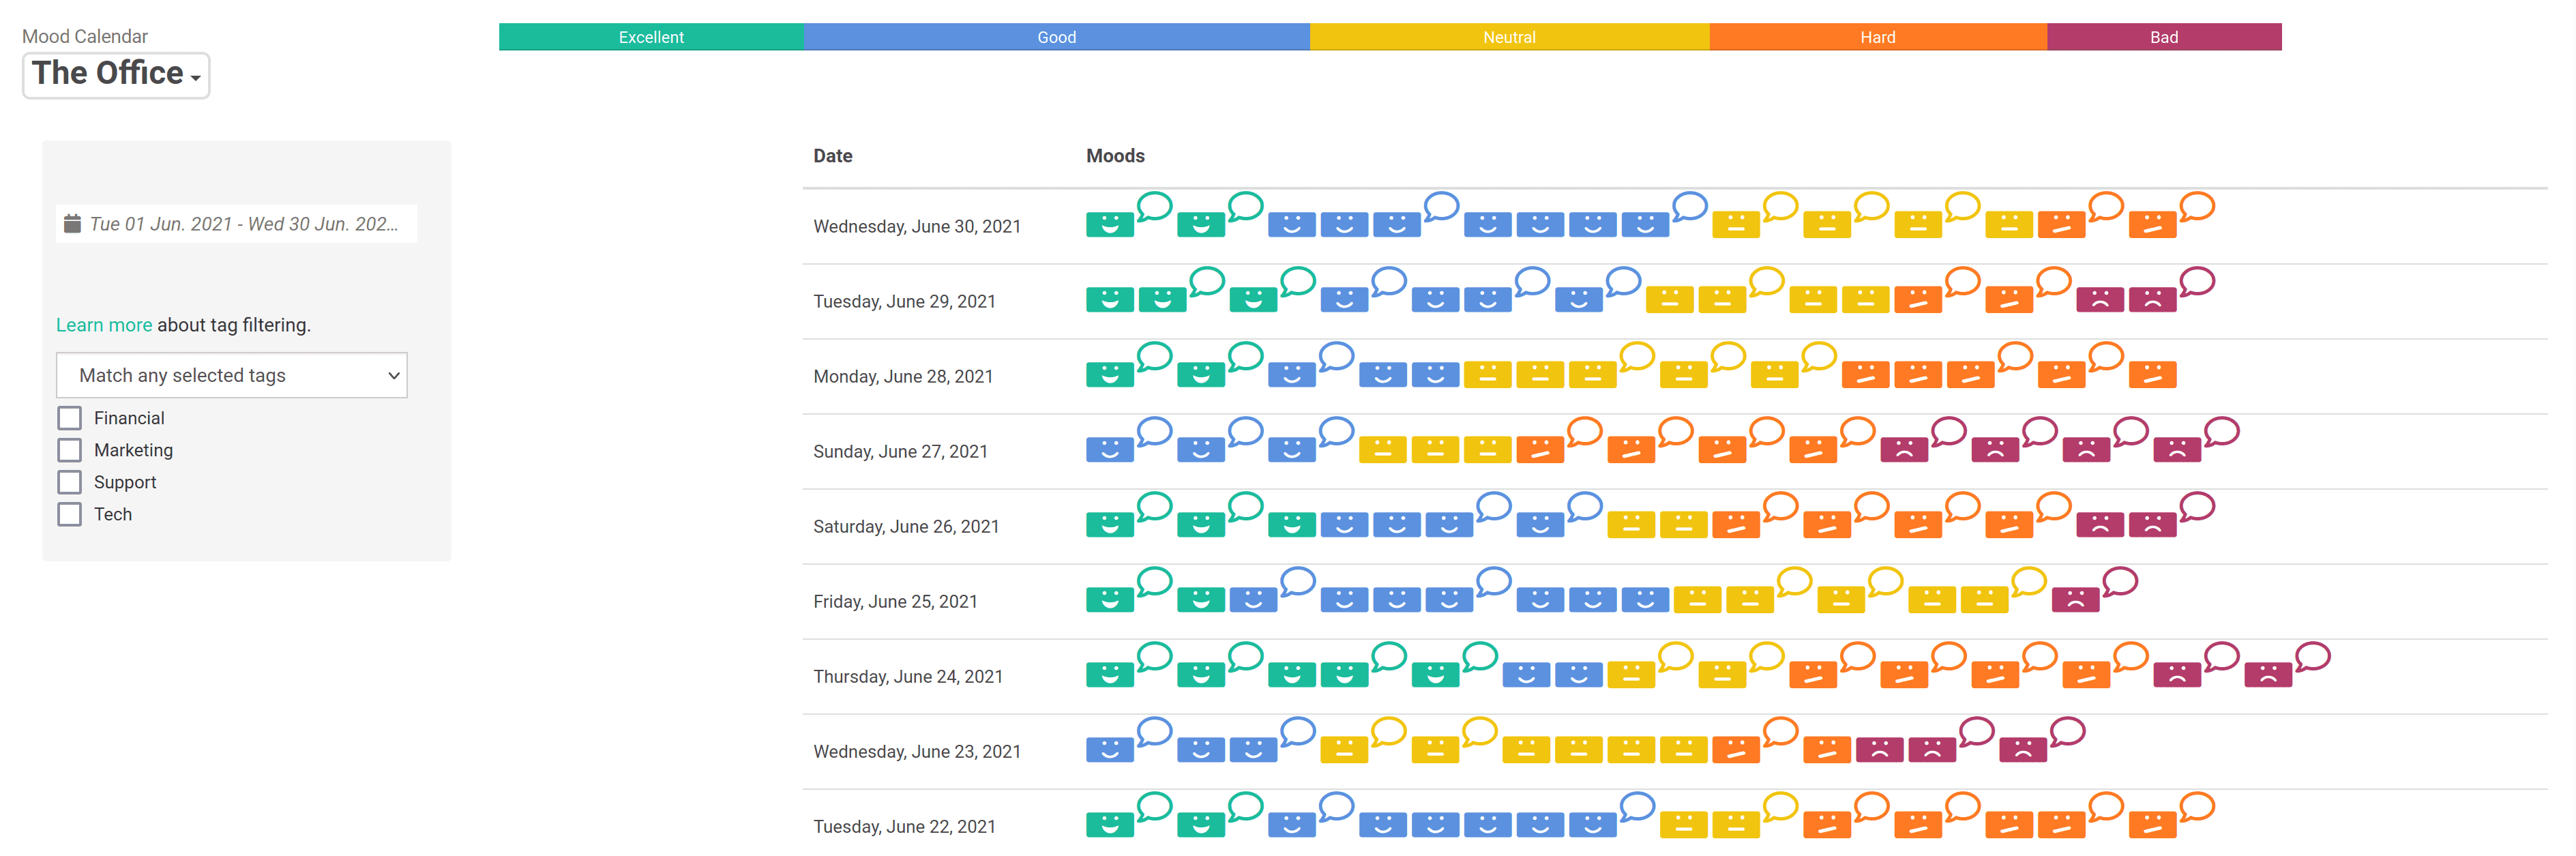 TeamMood - niko-niko calendar